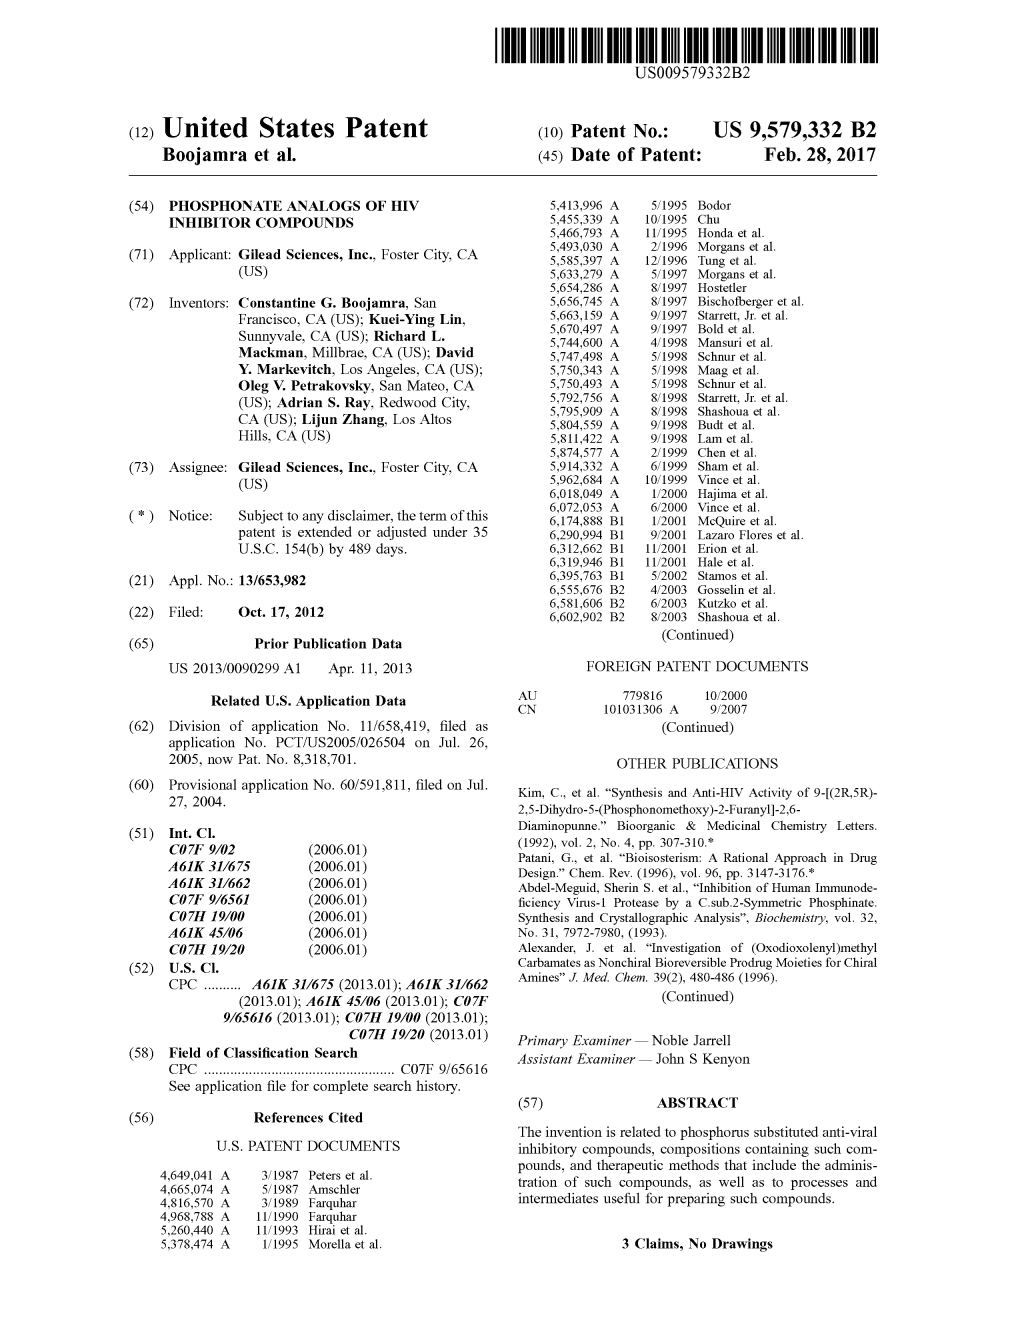 (12) United States Patent (10) Patent No.: US 9,579,332 B2 Boojamra Et Al